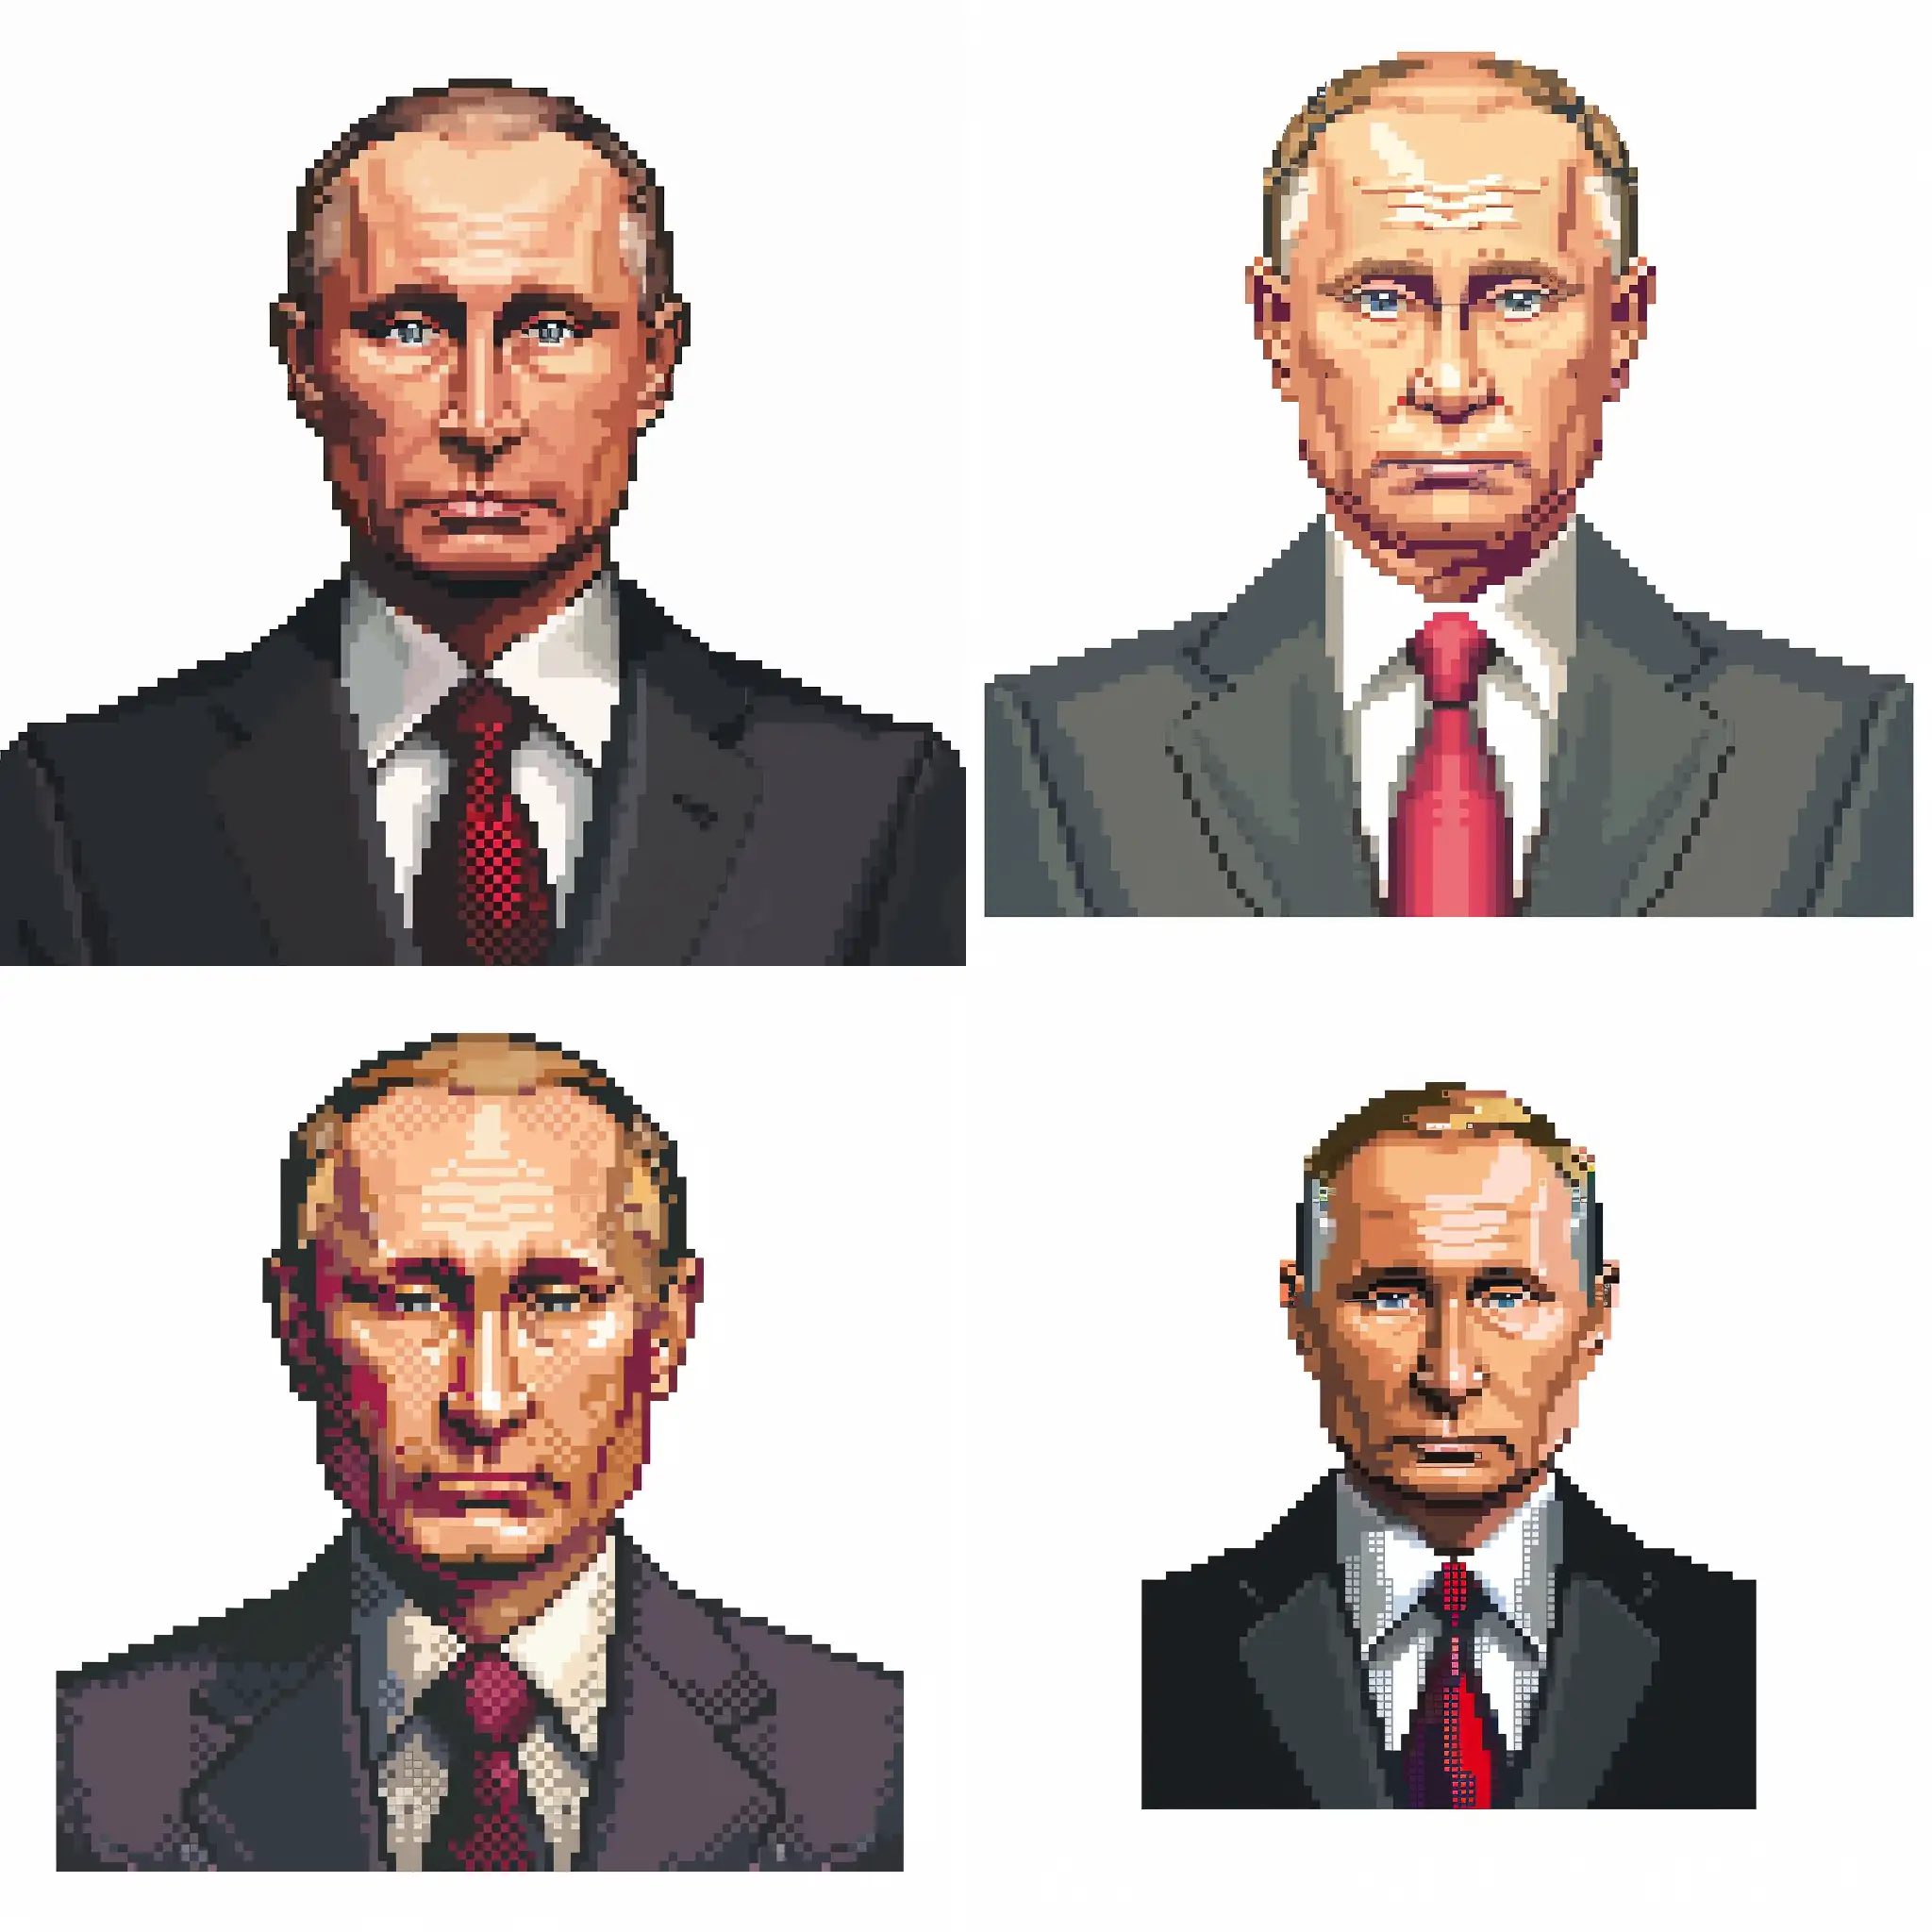 Vladimir-Putin-Pixel-Art-Portrait-on-White-Background